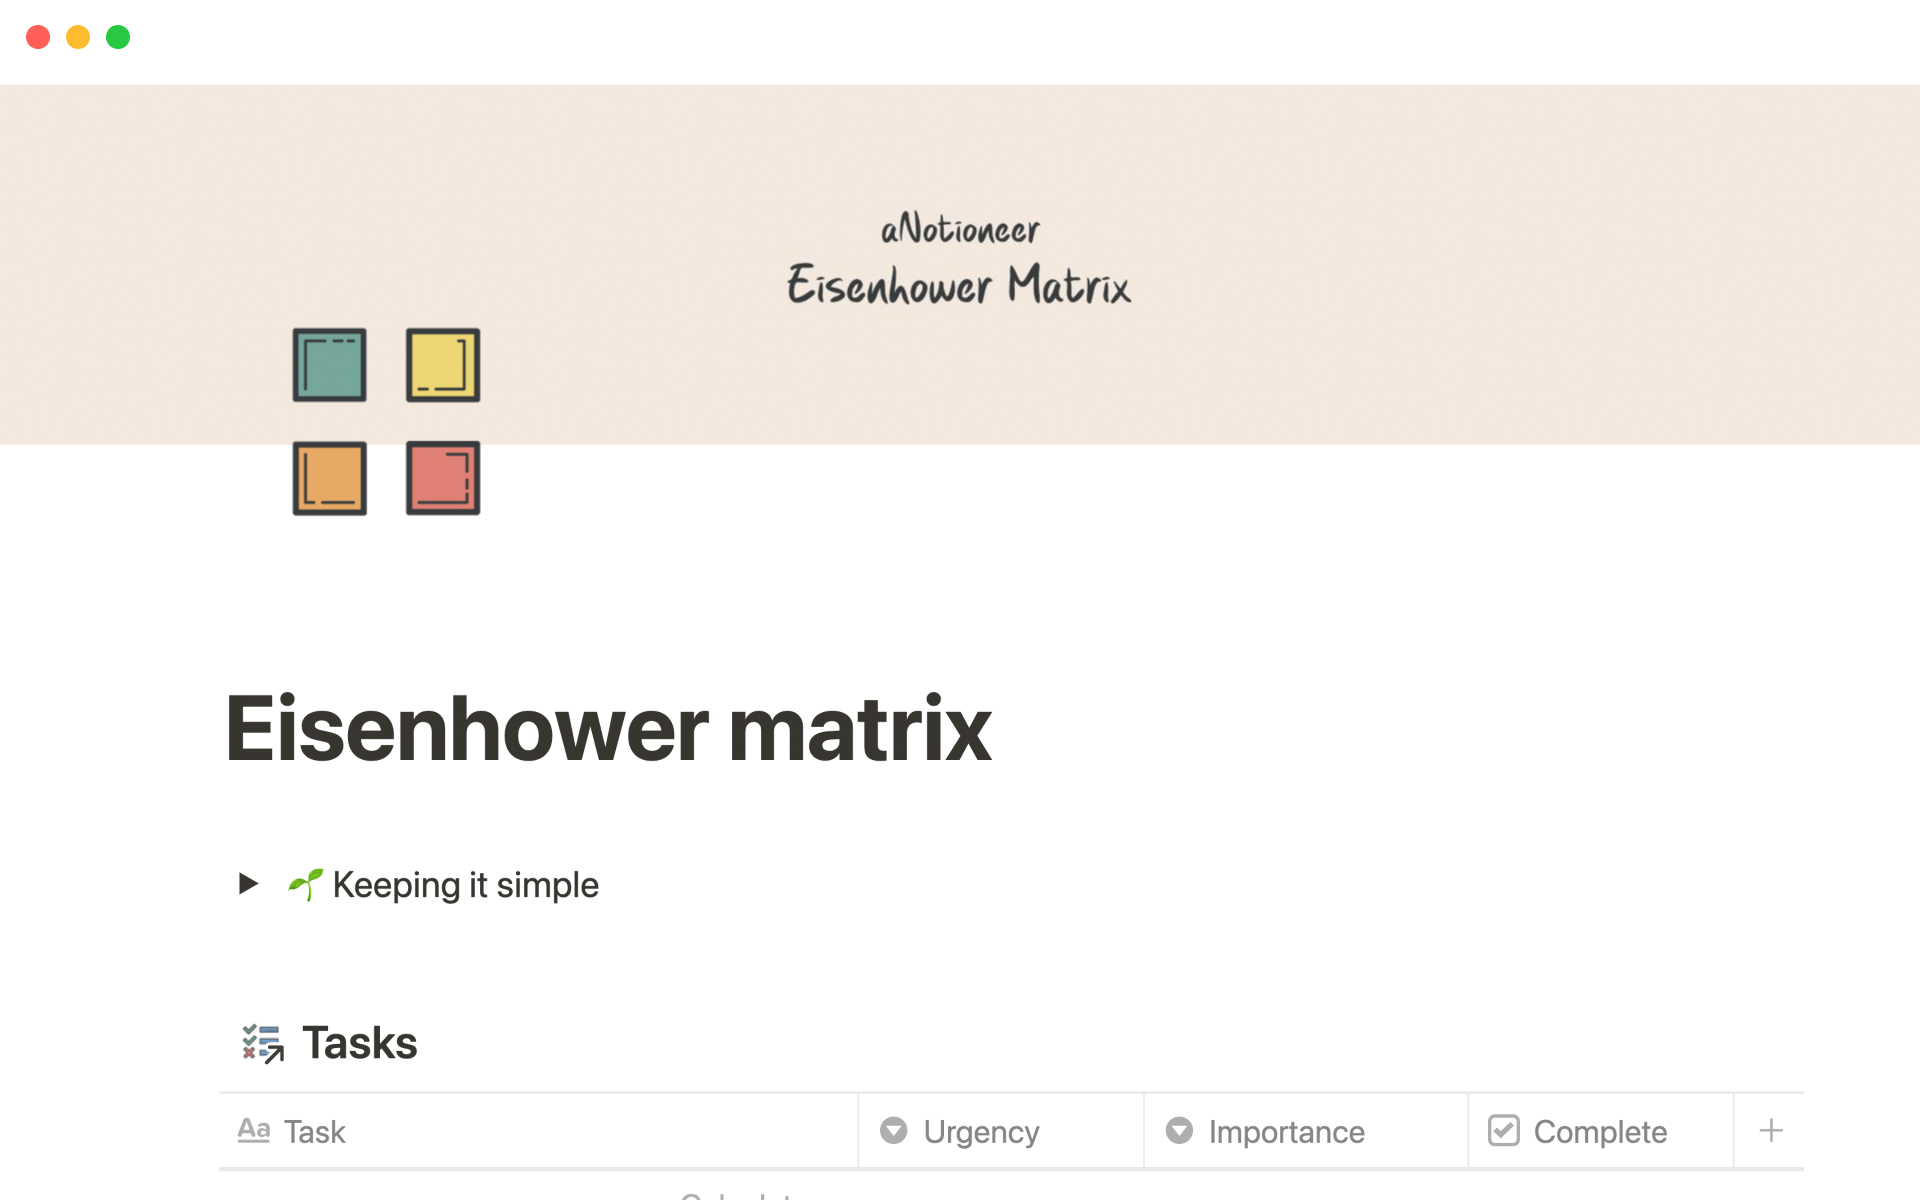 The desktop image for the Eisenhower matrix template